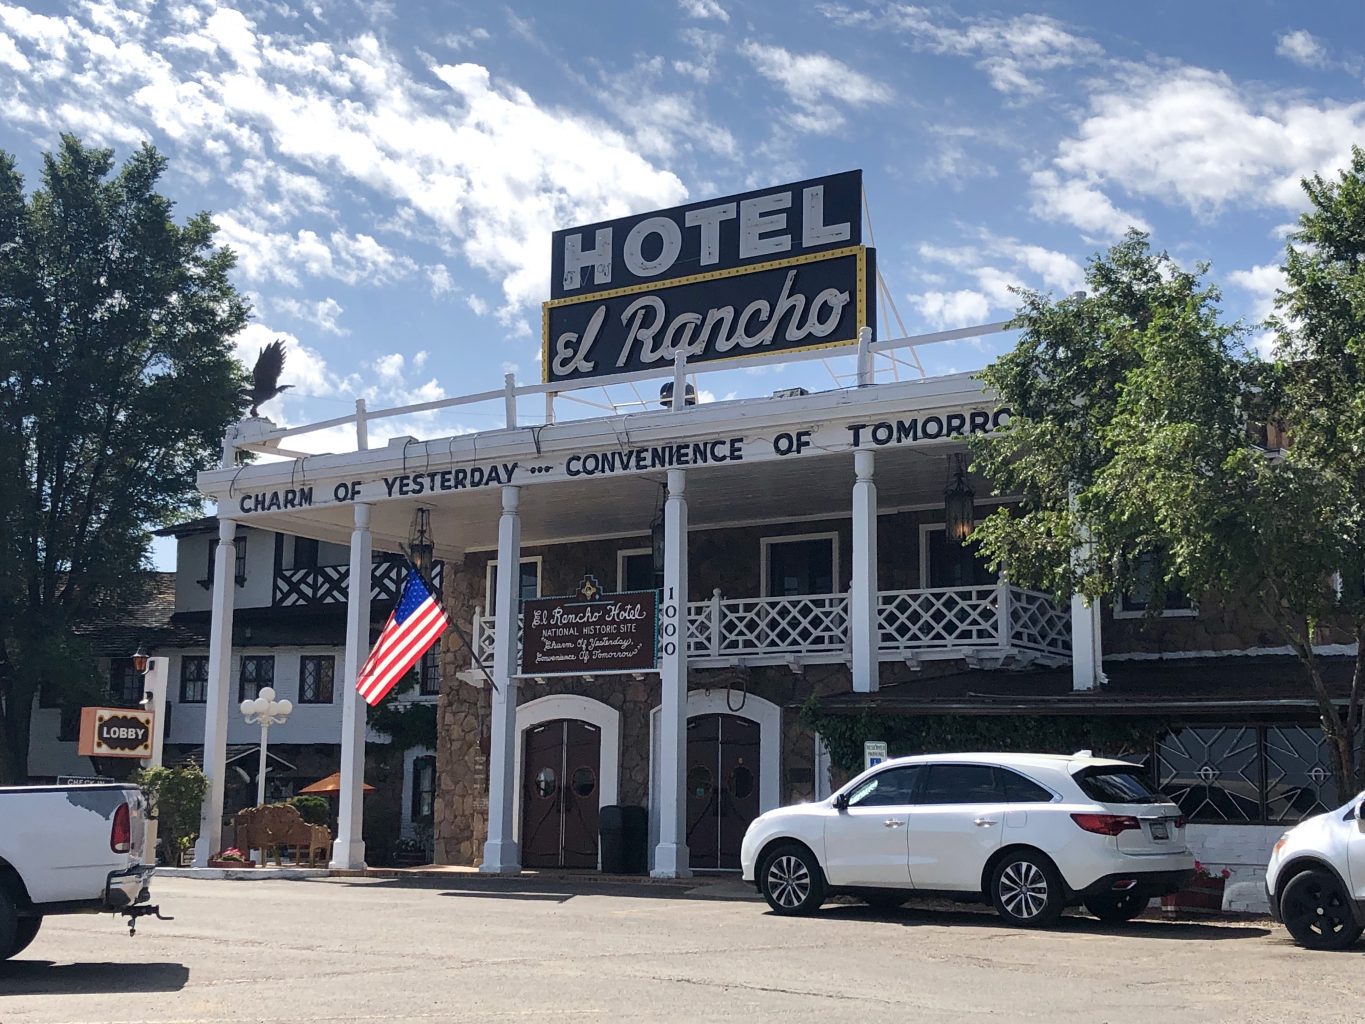 El Rancho Hotel. RUTA 66, Etapa 6: Albuquerque- Flagstaff